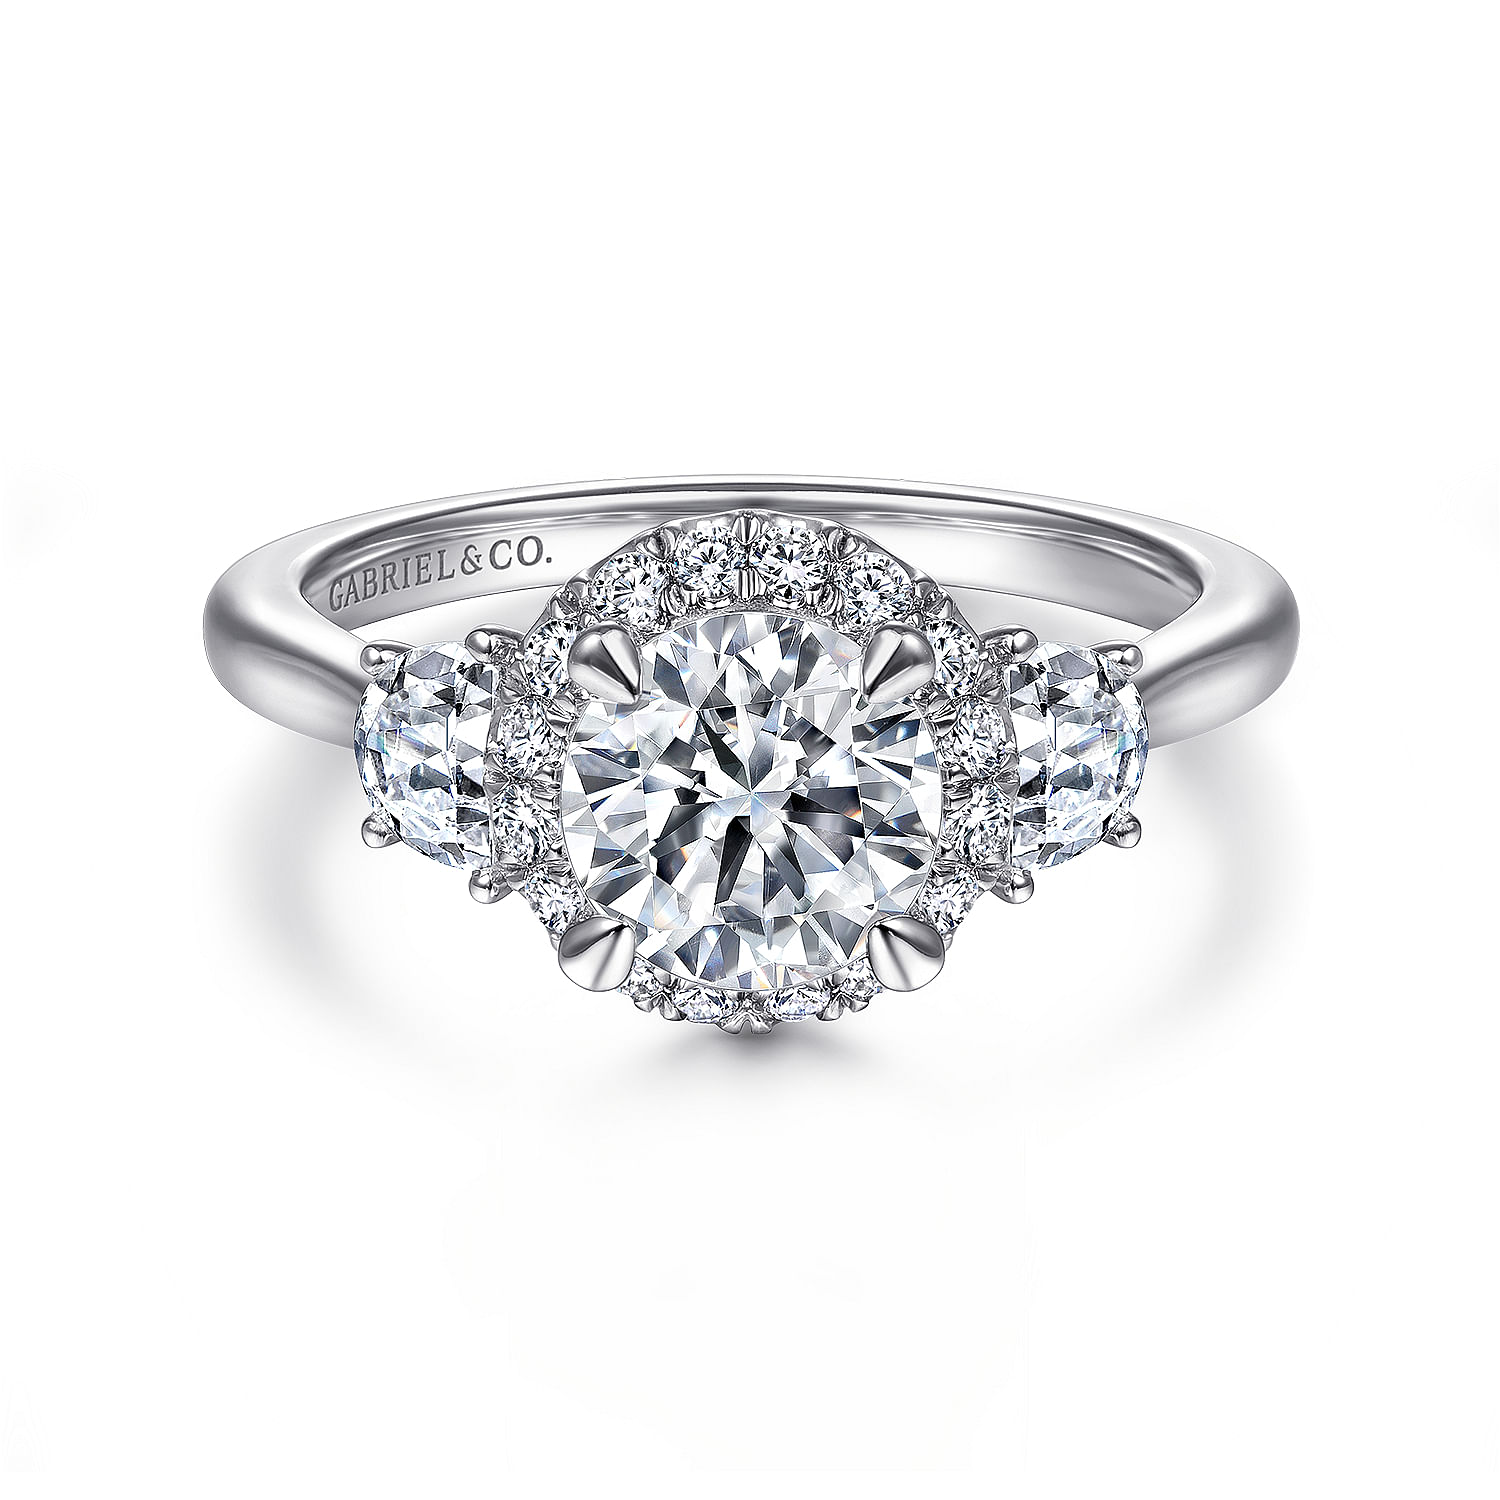 Galilea - 14K White Gold Round 3 Stone Halo Diamond Engagement Ring